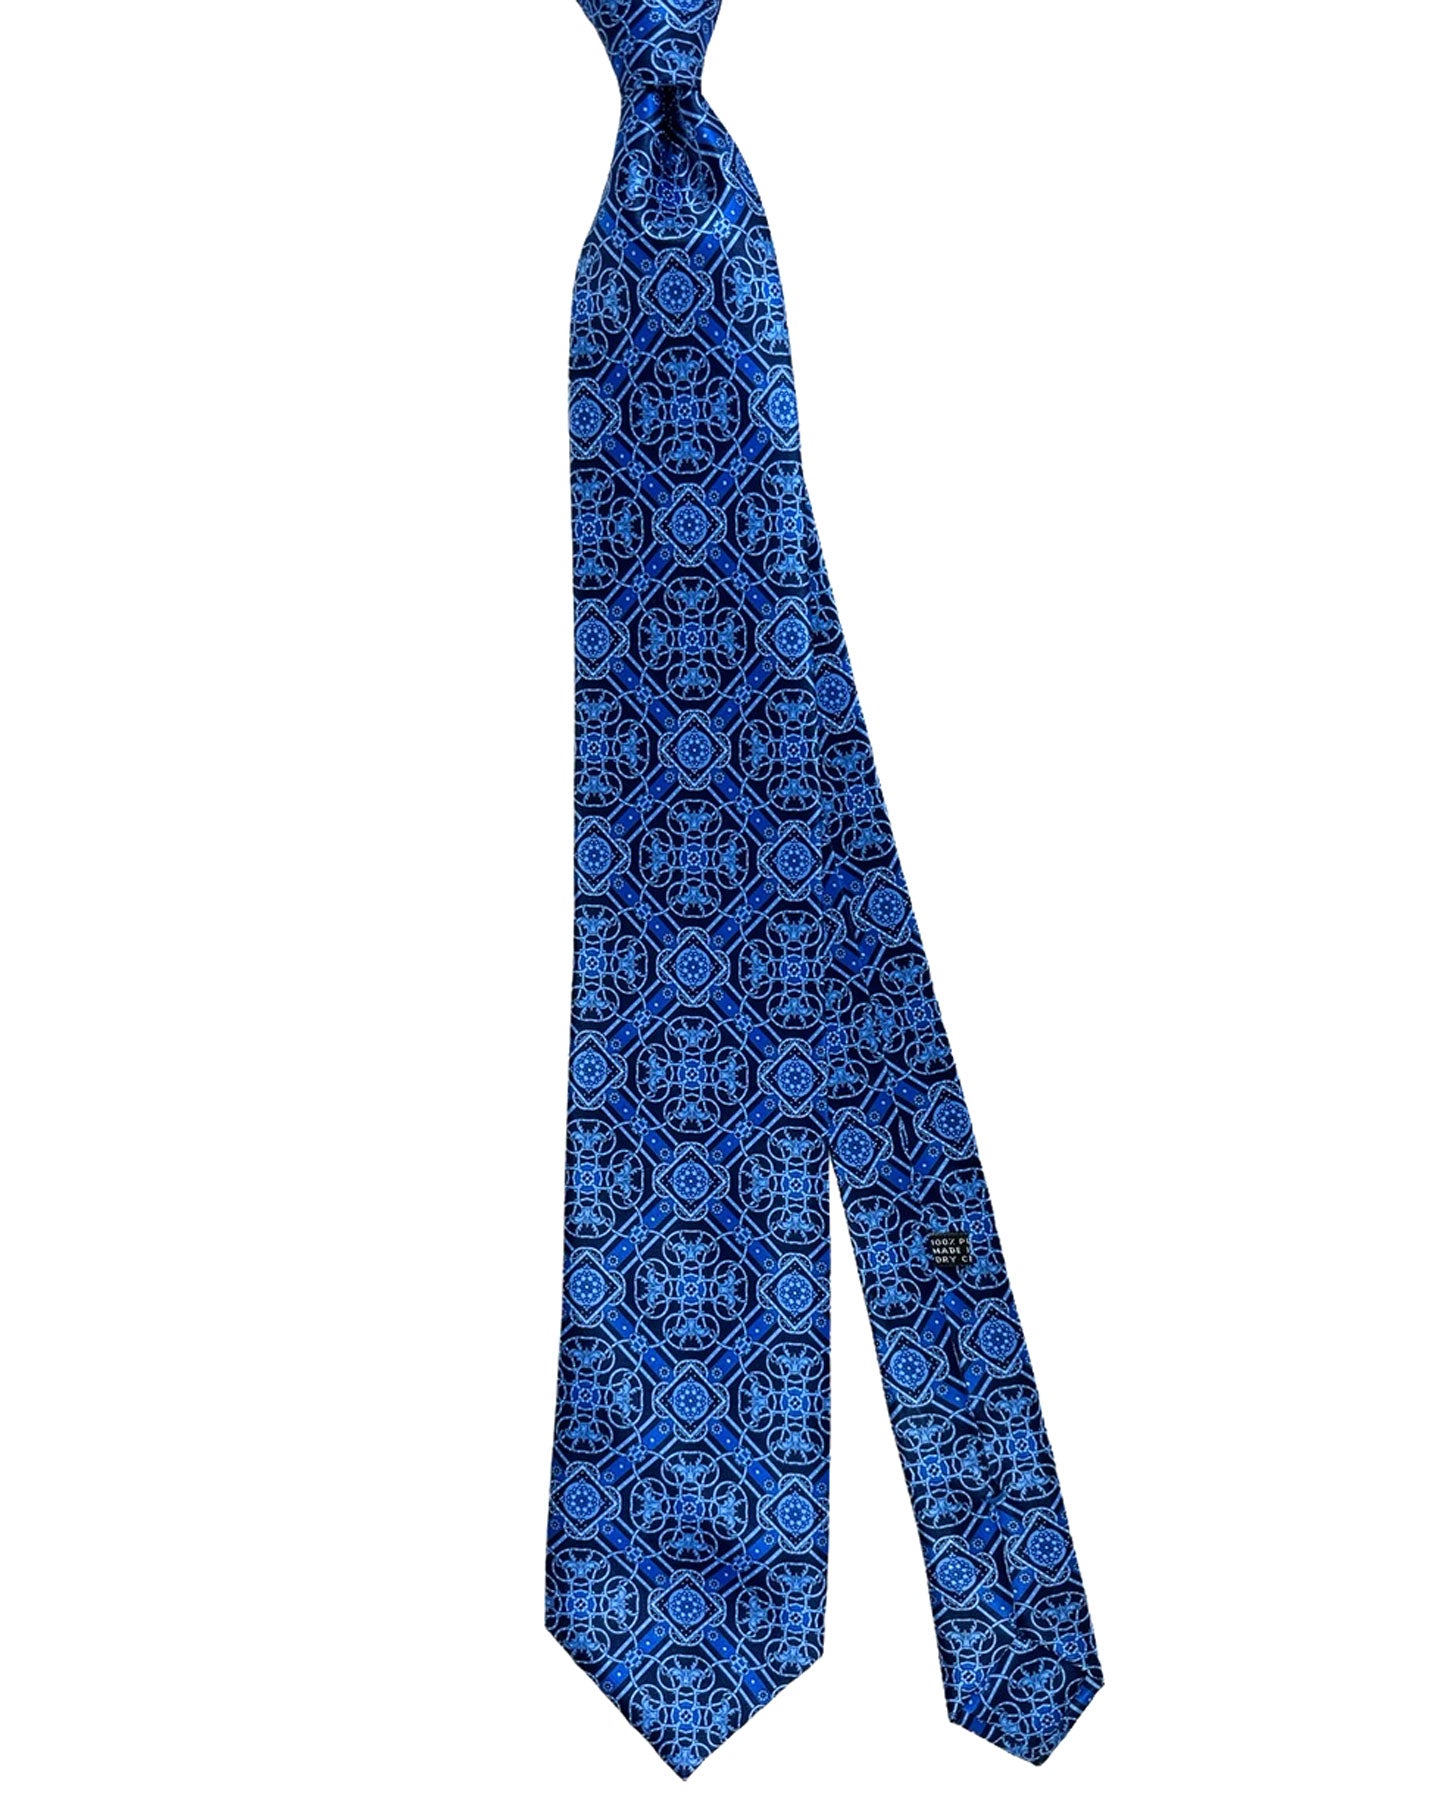 Stefano Ricci Silk Tie Royal Blue Dark Blue Medallions Design